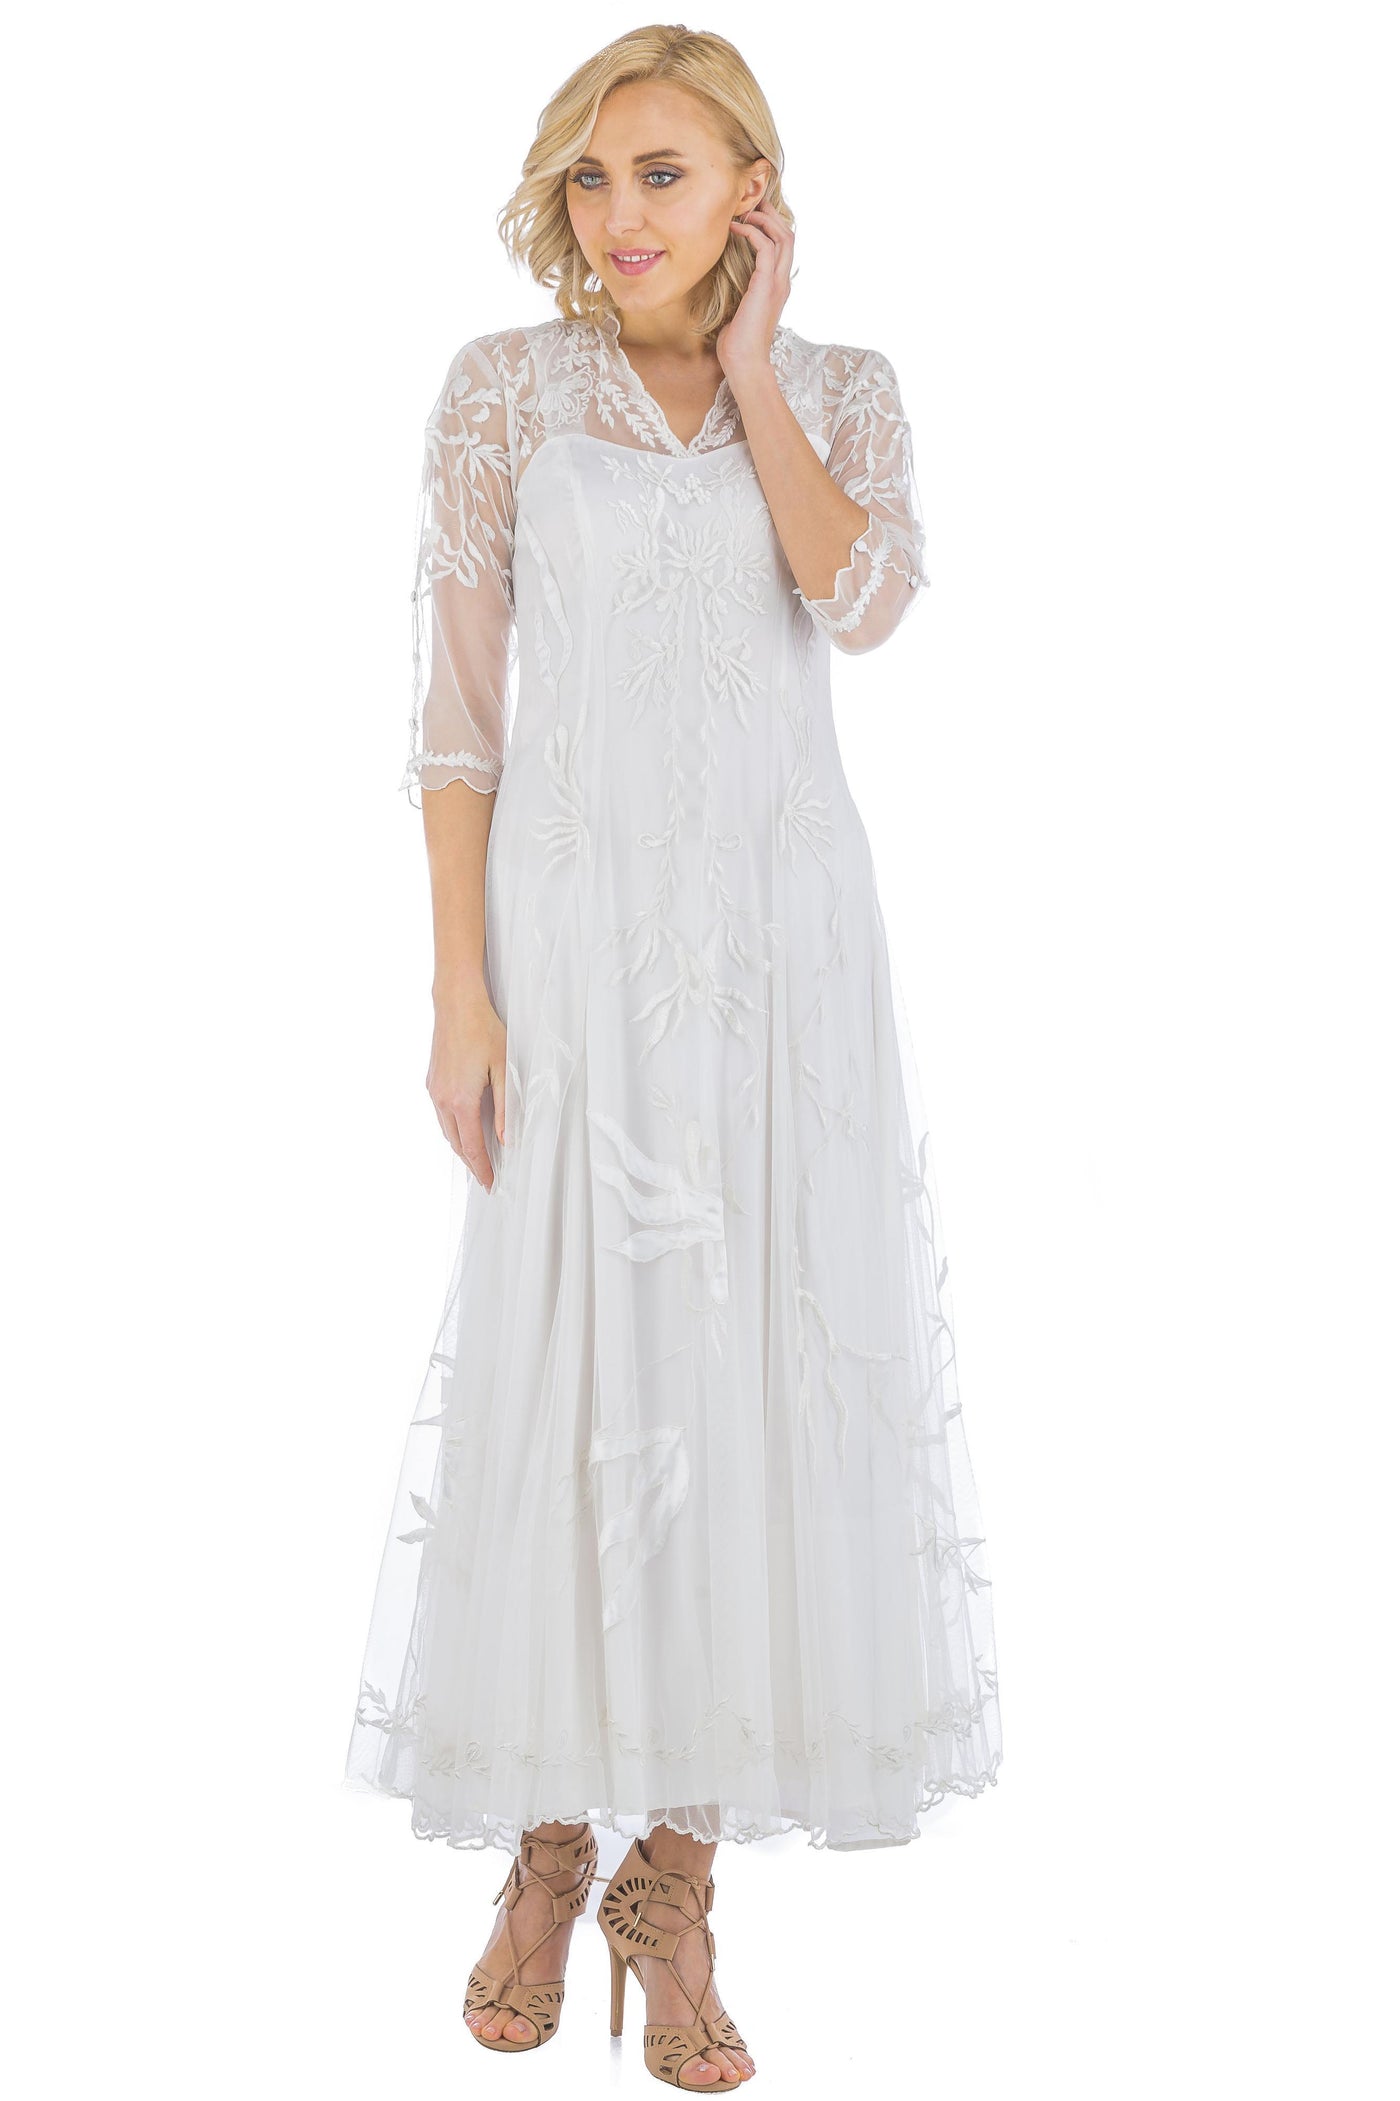 Elizabeth Vintage Style Wedding Gown in Ivory by Nataya